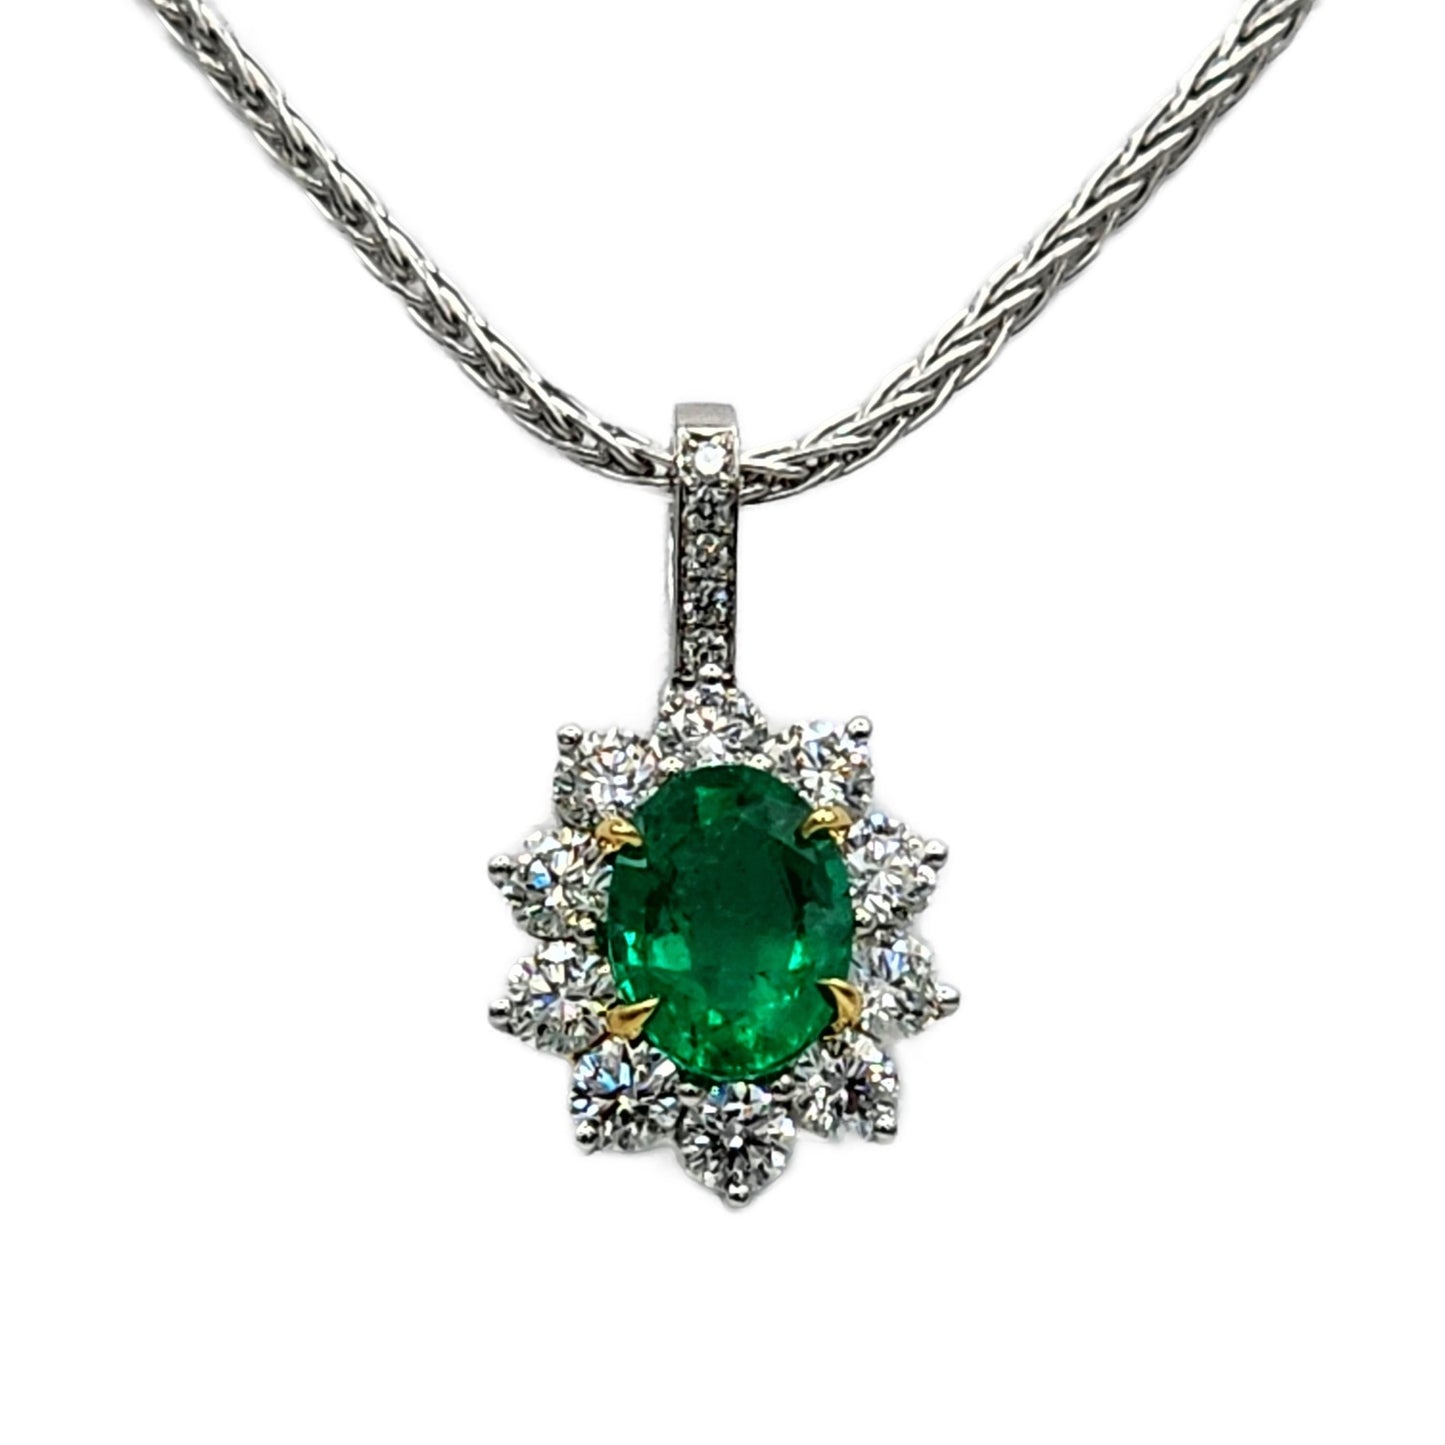 1.53 Carat Oval Emerald and 15=1.17 Carat Diamond Pendant Handmade in Platinum